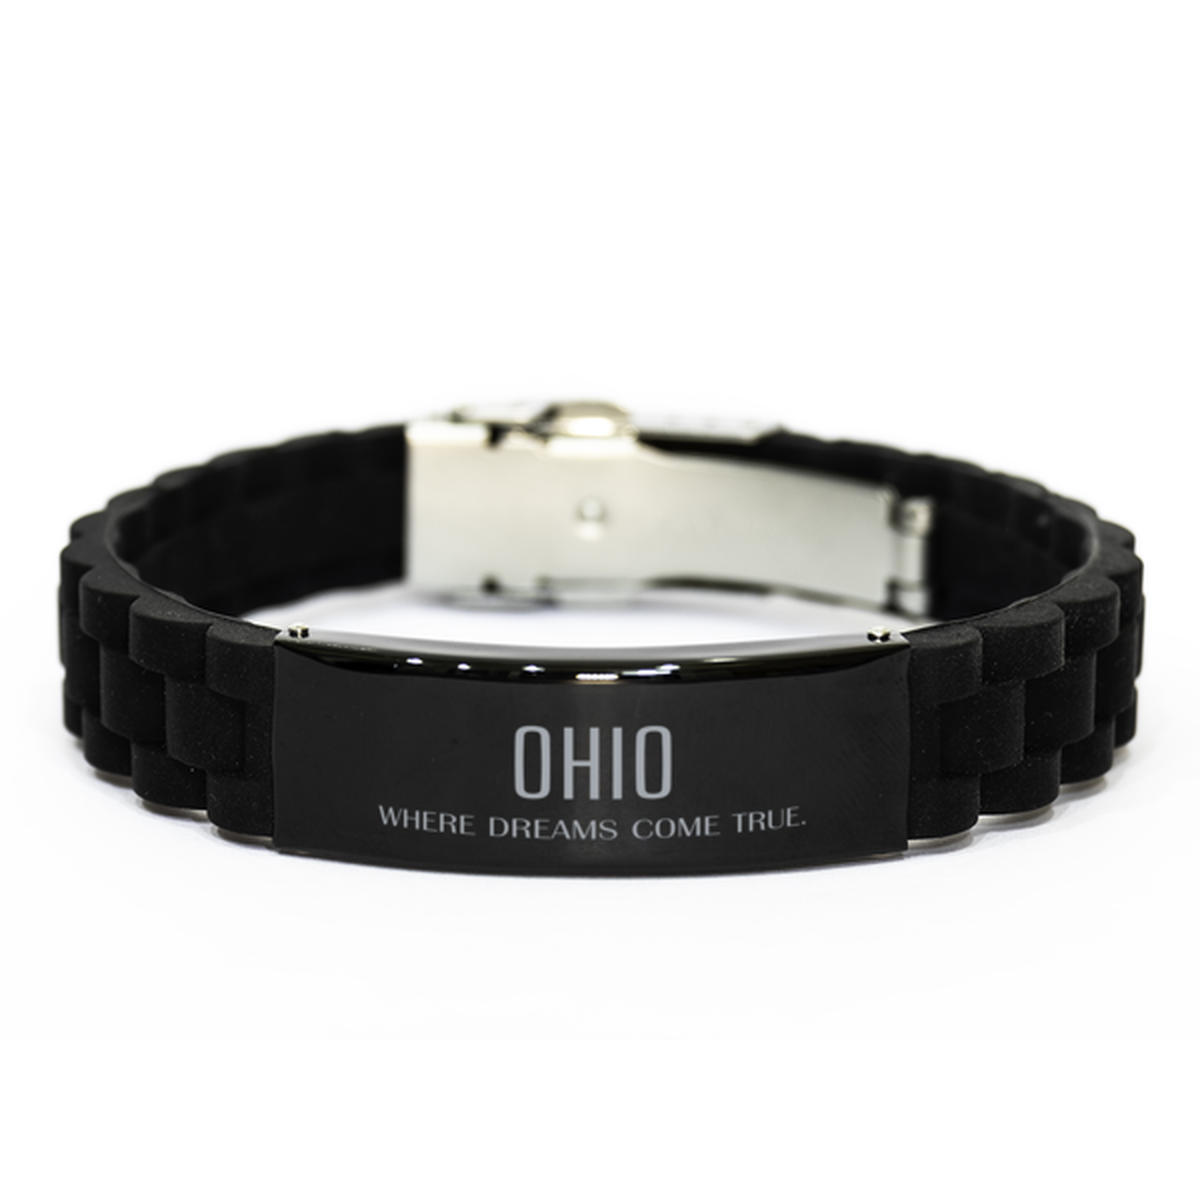 Love Ohio State Black Glidelock Clasp Bracelet, Ohio Where dreams come true, Birthday Inspirational Gifts For Ohio Men, Women, Friends